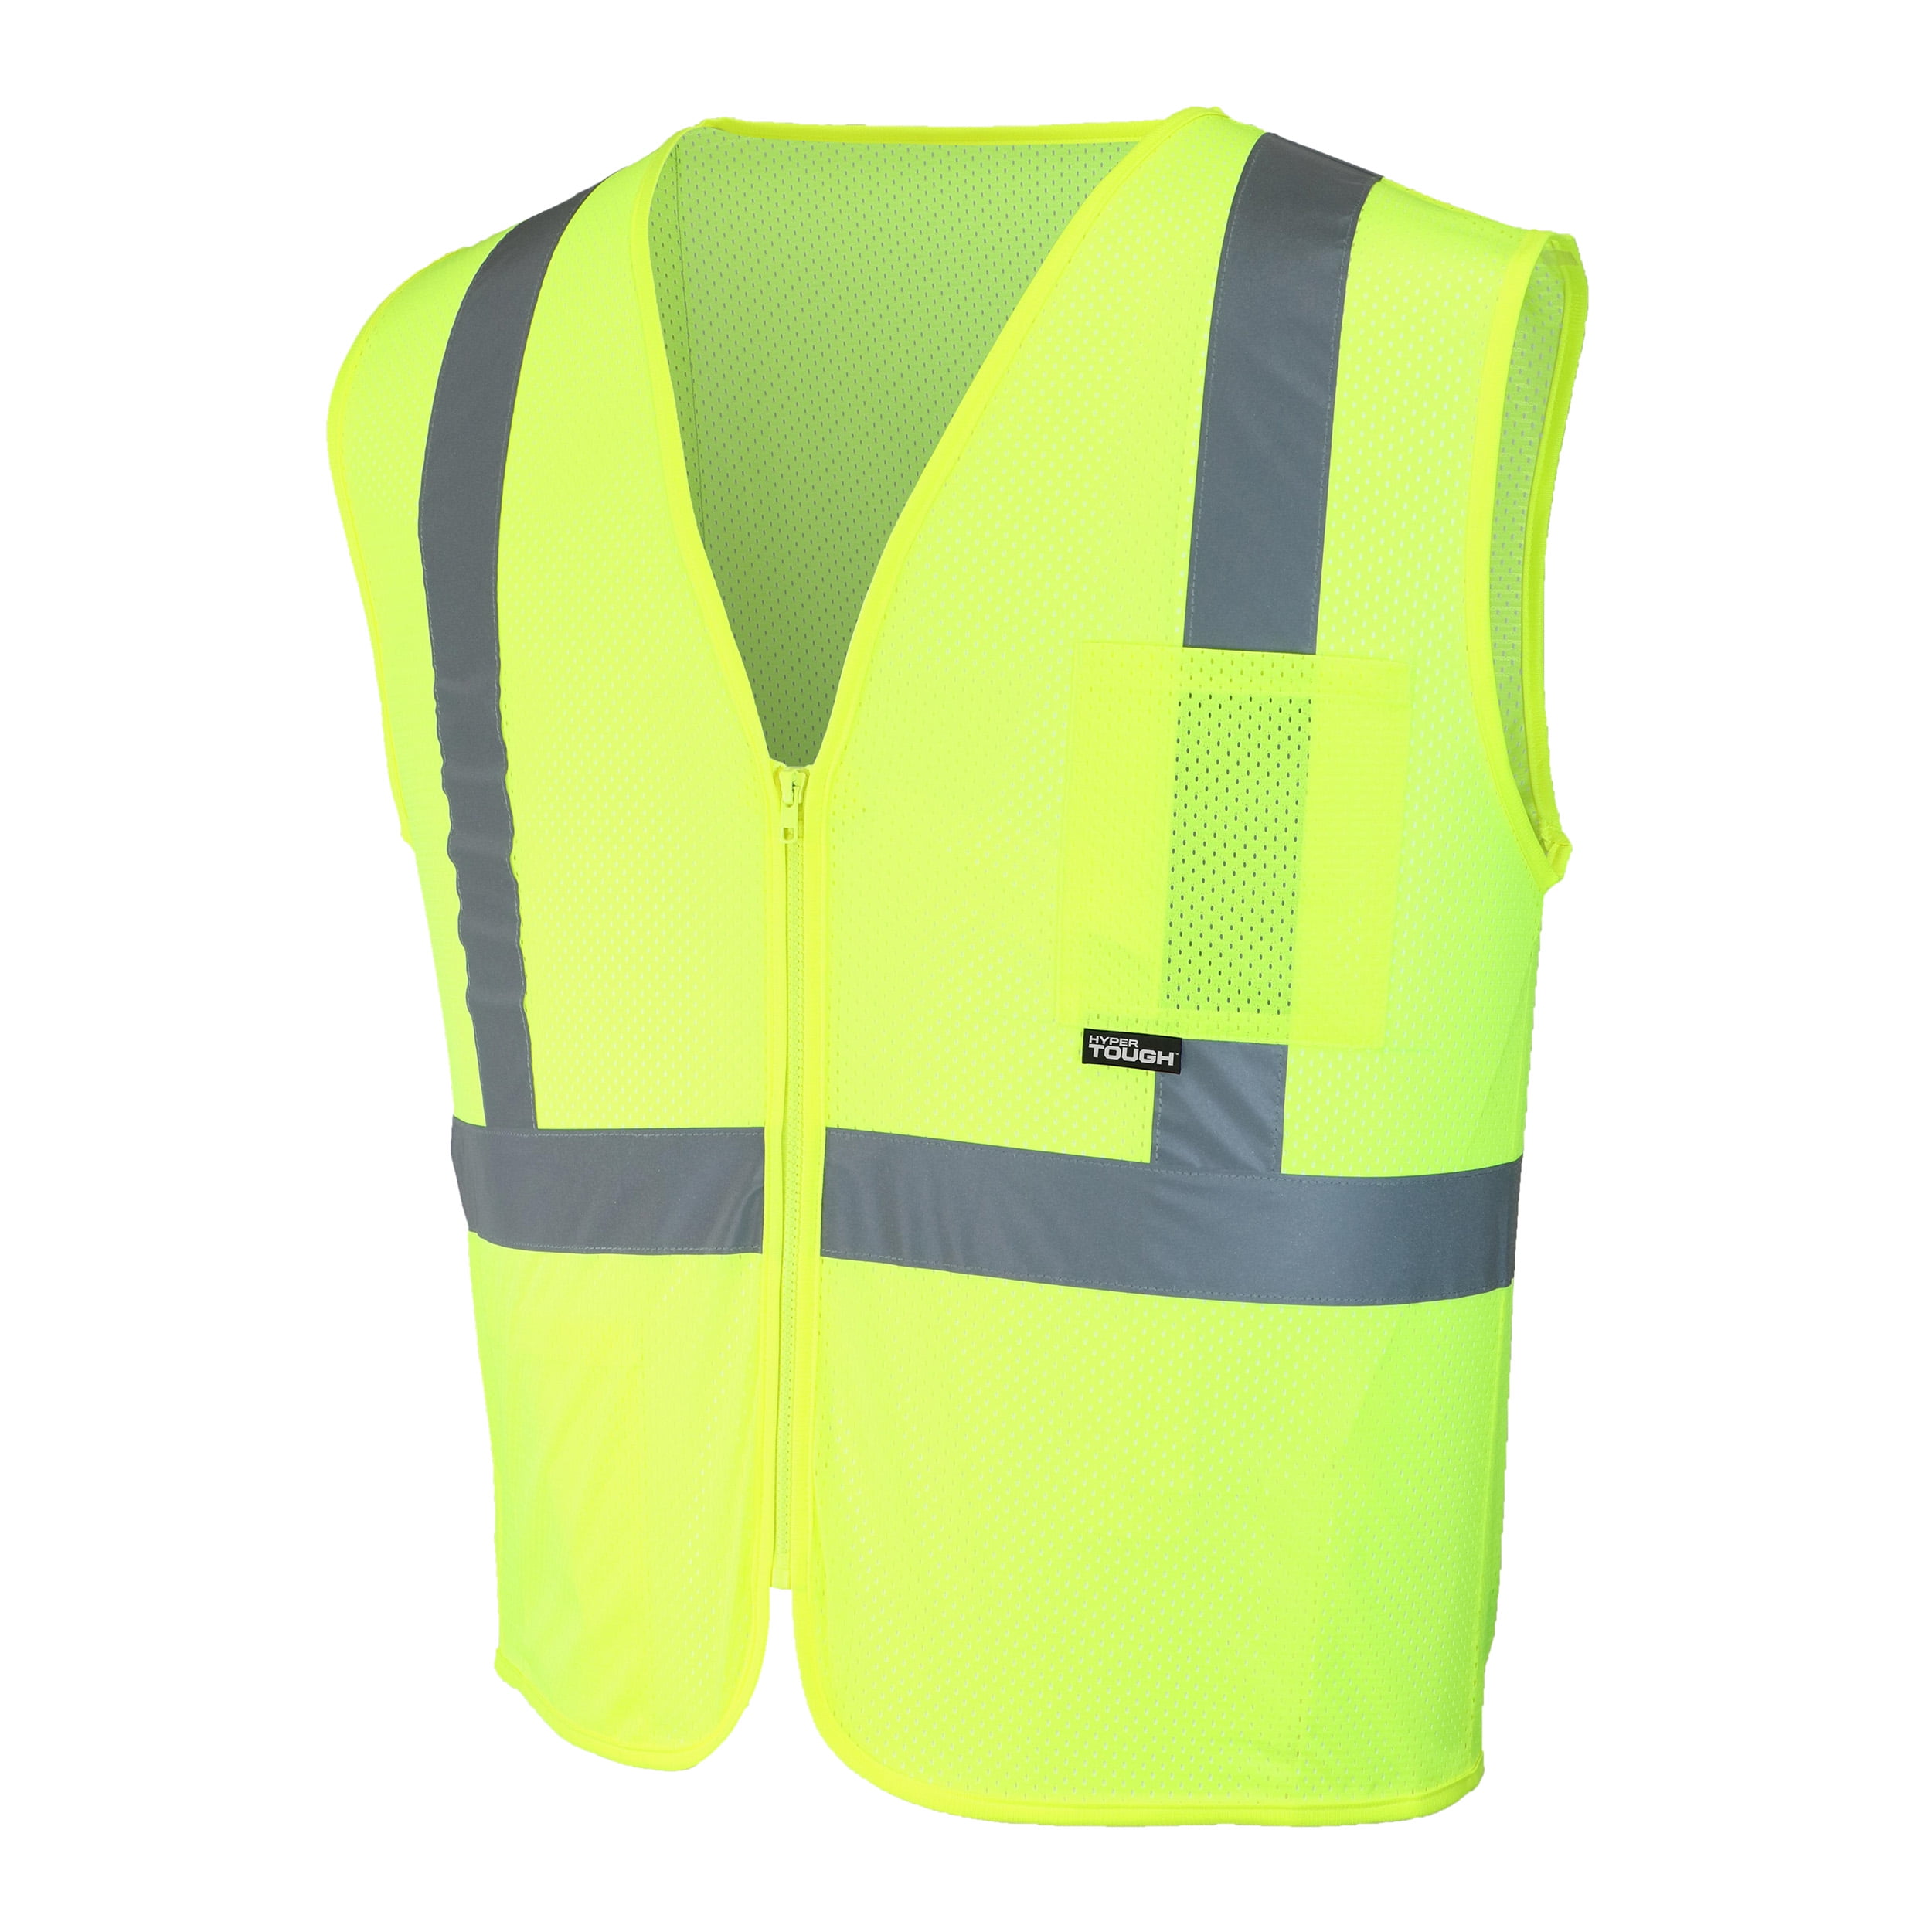 Hyper Tough ANSI Class 2 High Visibility Safety Vest, One Size Fits Most, 1 Vest